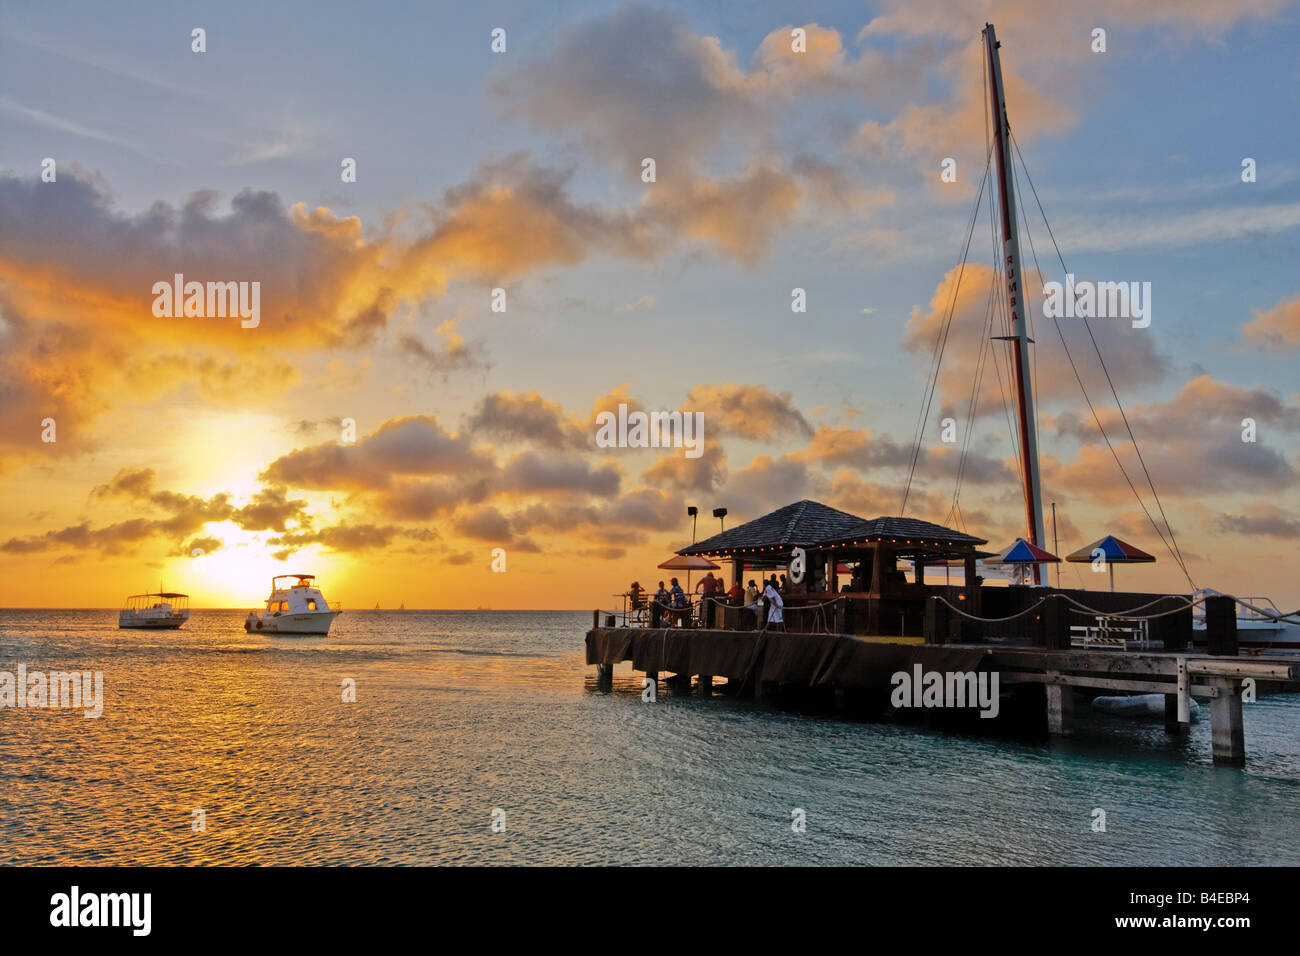 Aruba Palm Beach sunset Antille Olandesi Caraibi America Centrale Foto Stock